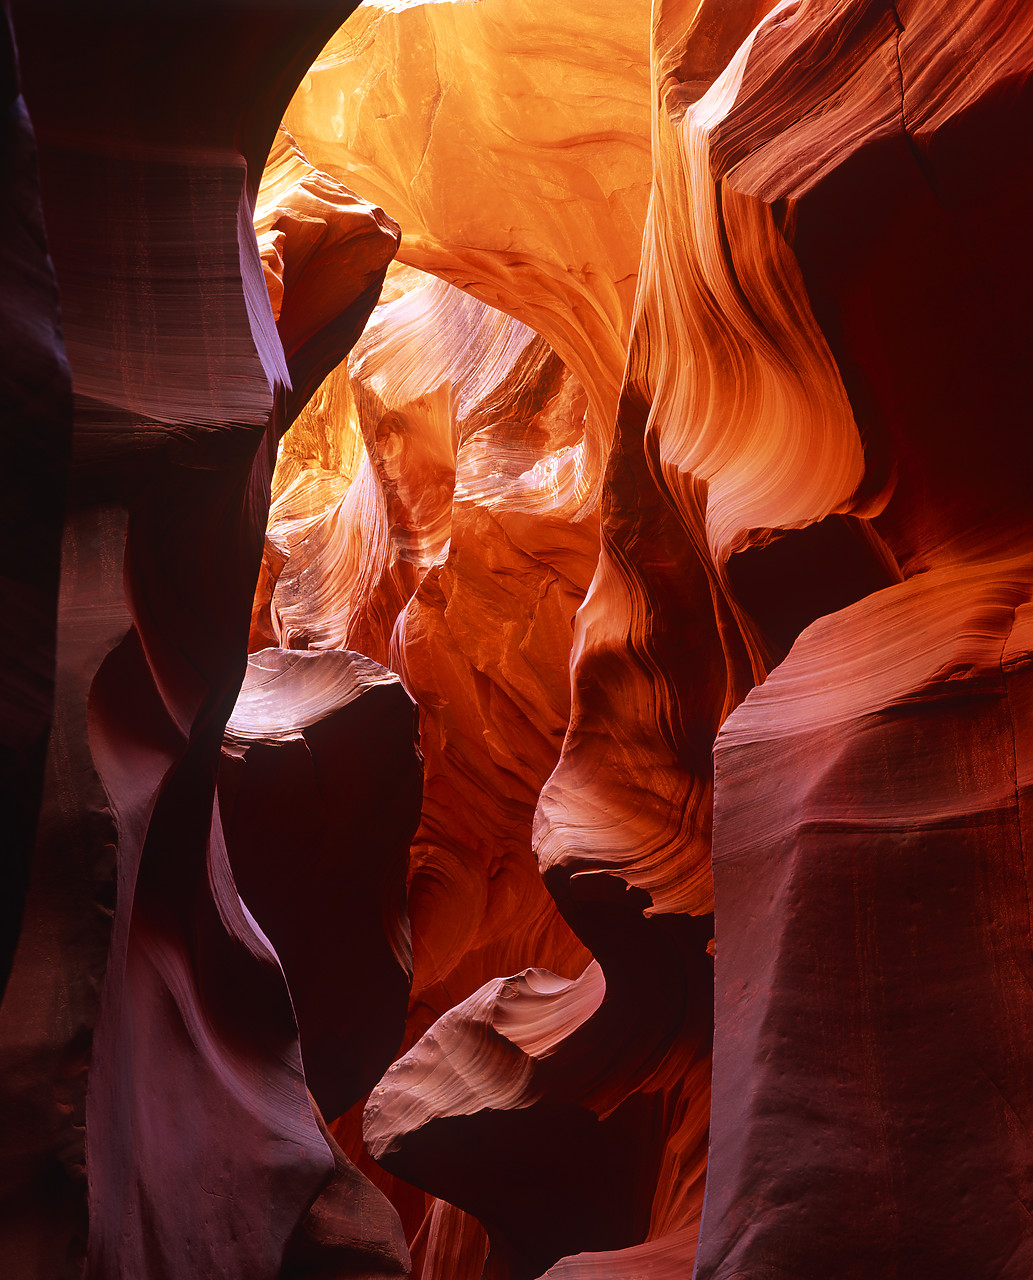 #060817-1 - Sandstone Slot Canyon, near Page, Arizona, USA